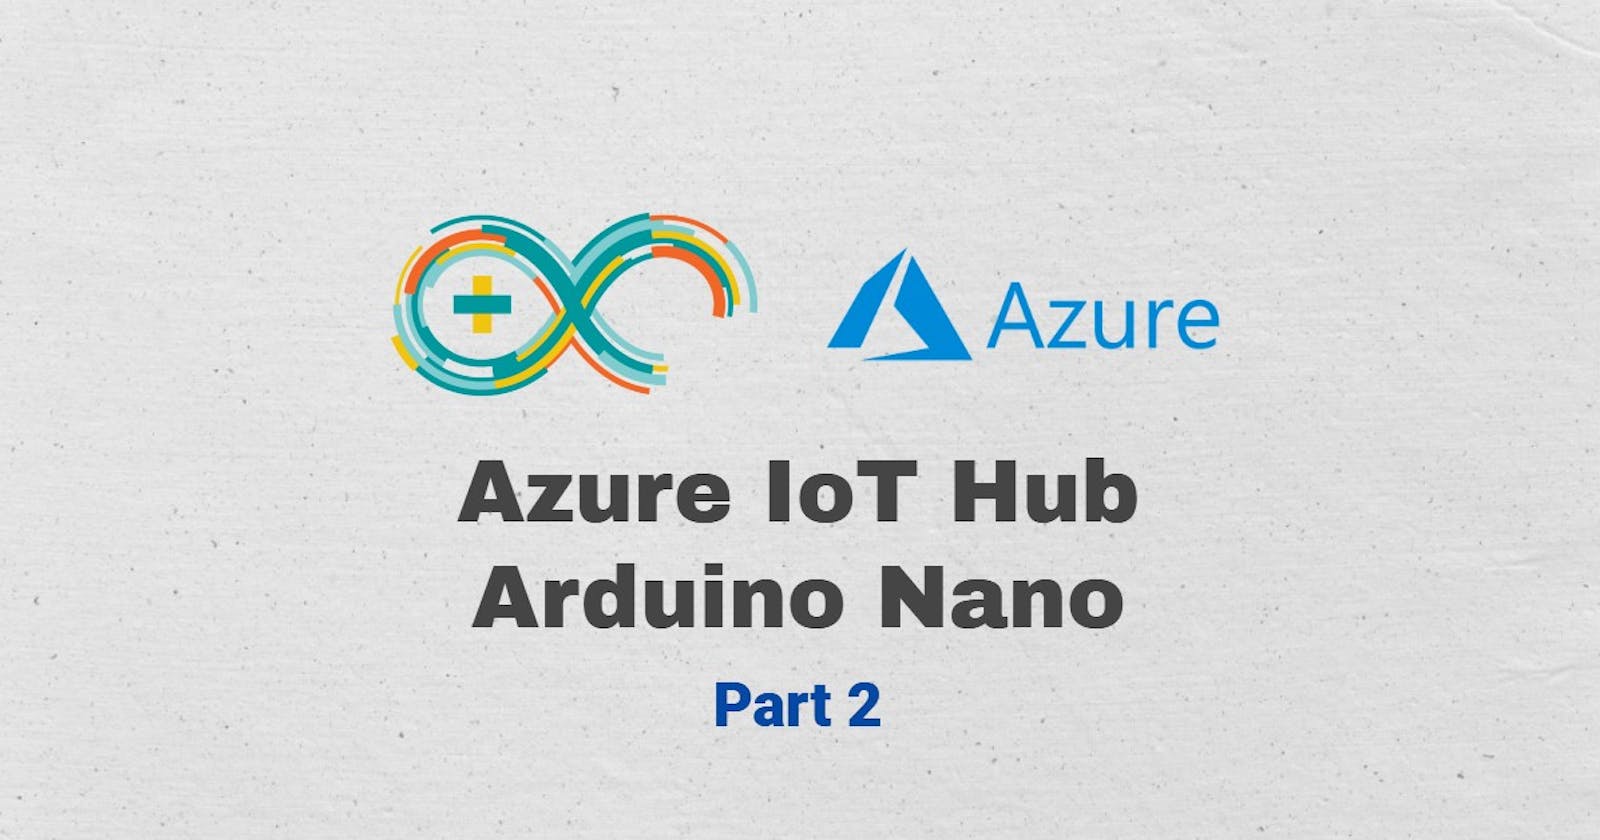 Build a room temperature monitor using Azure and Arduino Nano - Part 2